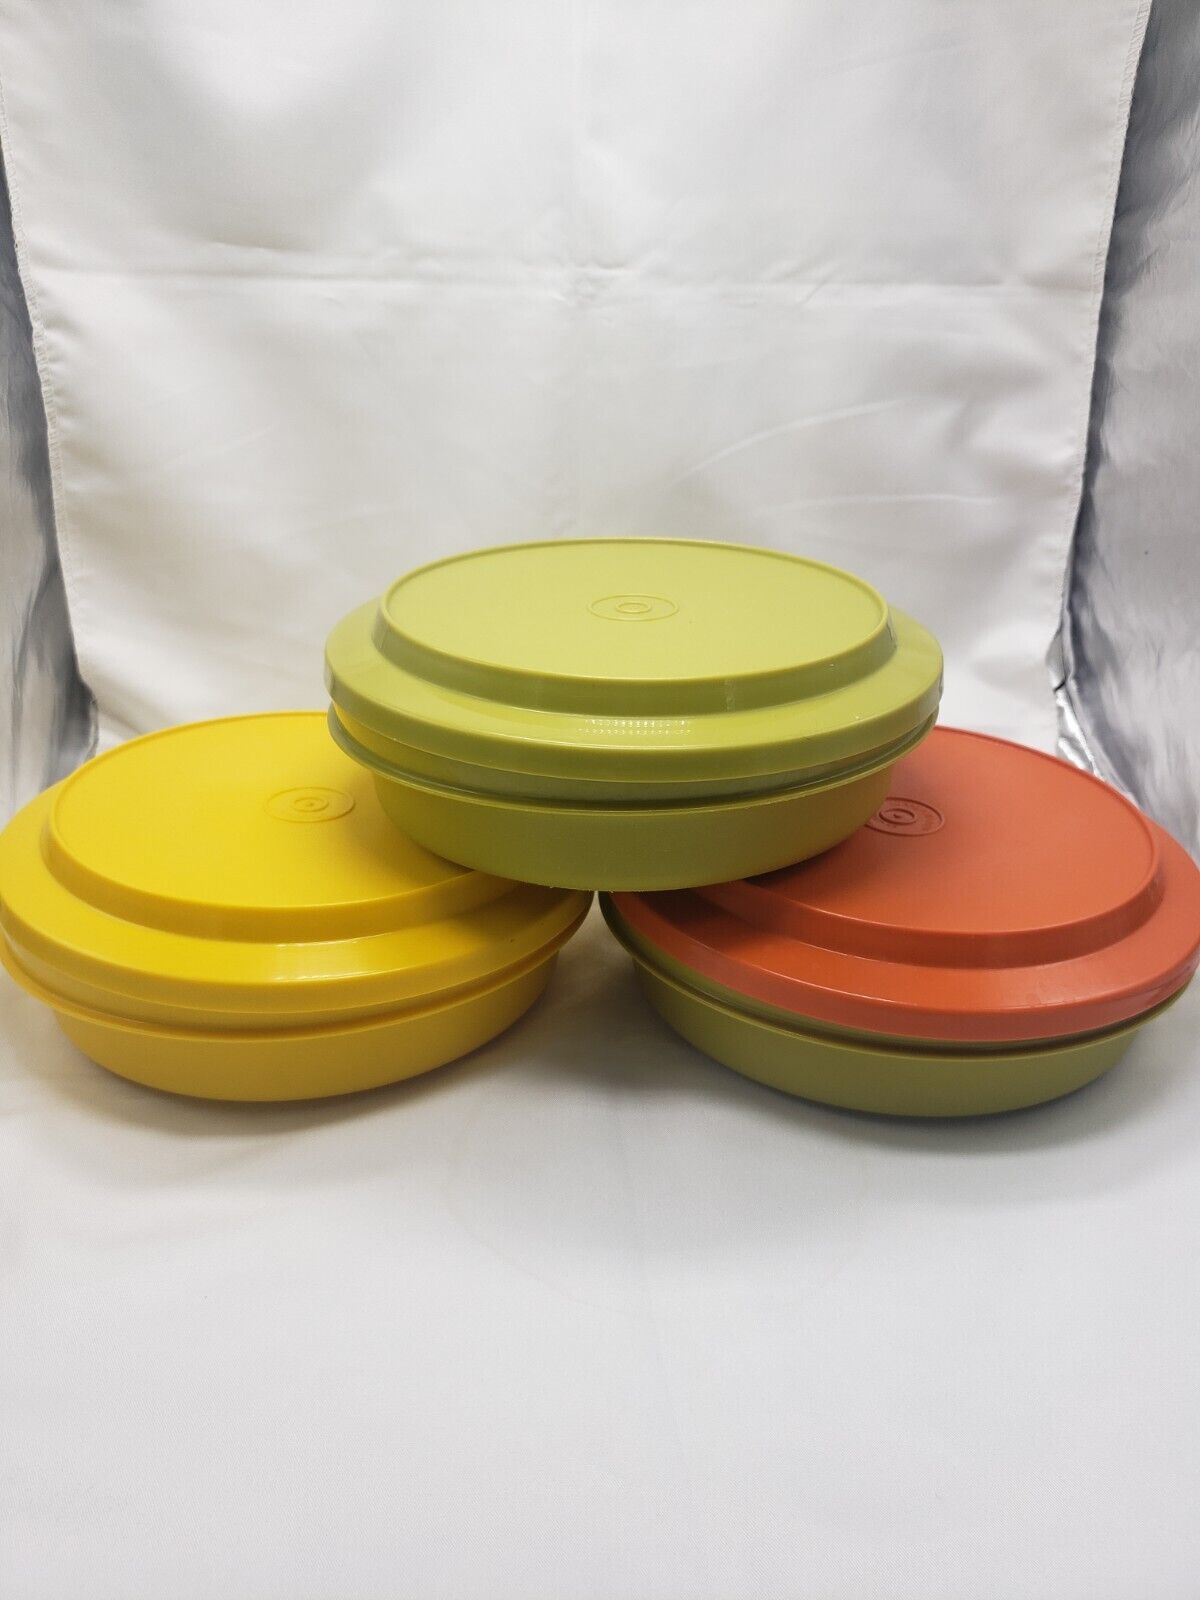 Vintage Tupperware Seal N Serve Bowls Harvest Colors Set of 3 with Lids1206,1207